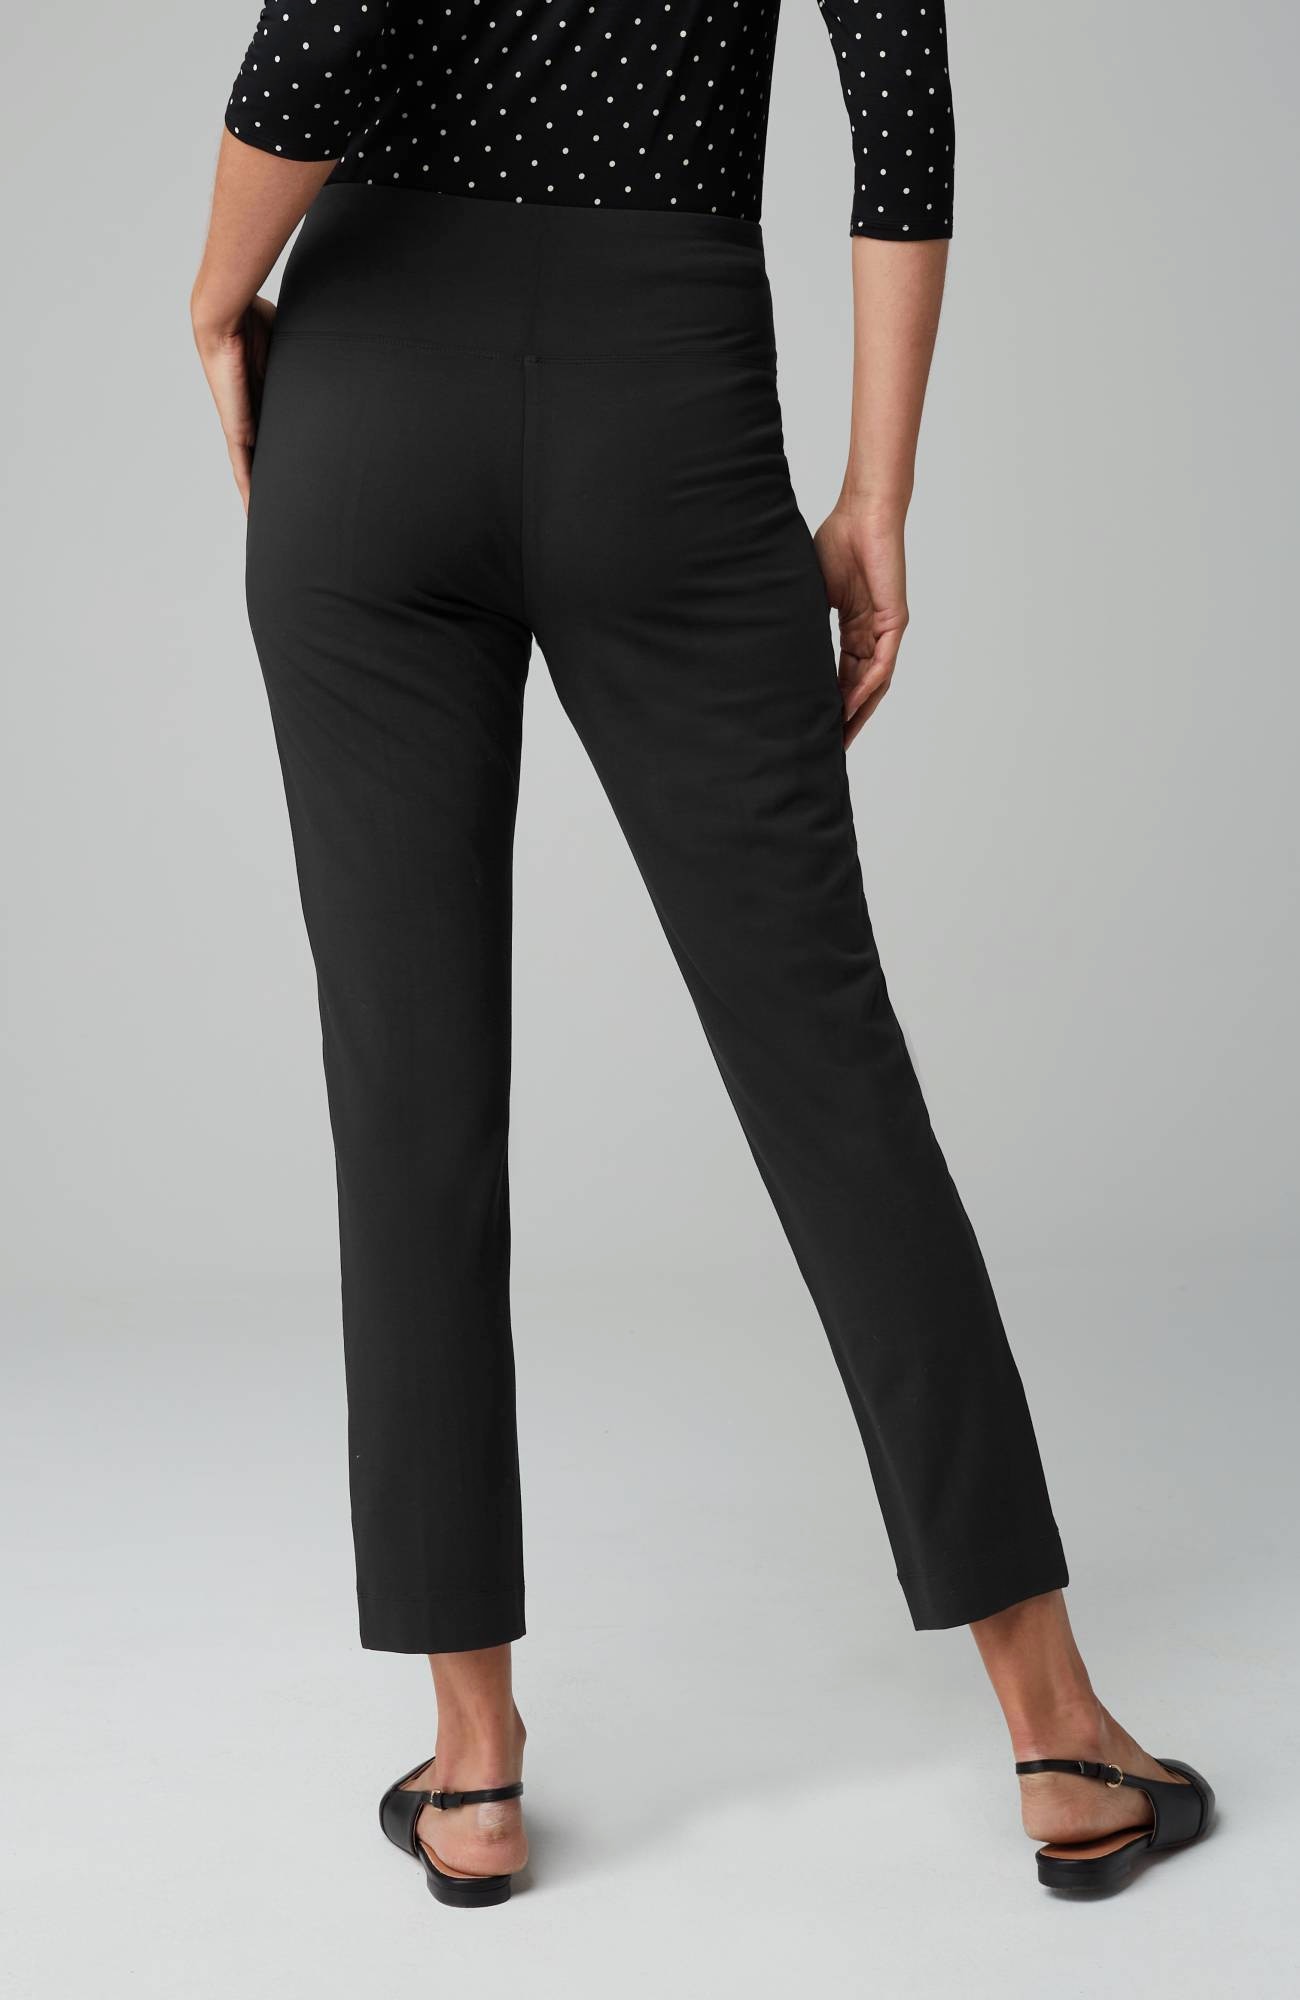 J. Jill Wearever Smooth-Fit Slim-Leg Pants Black XS.